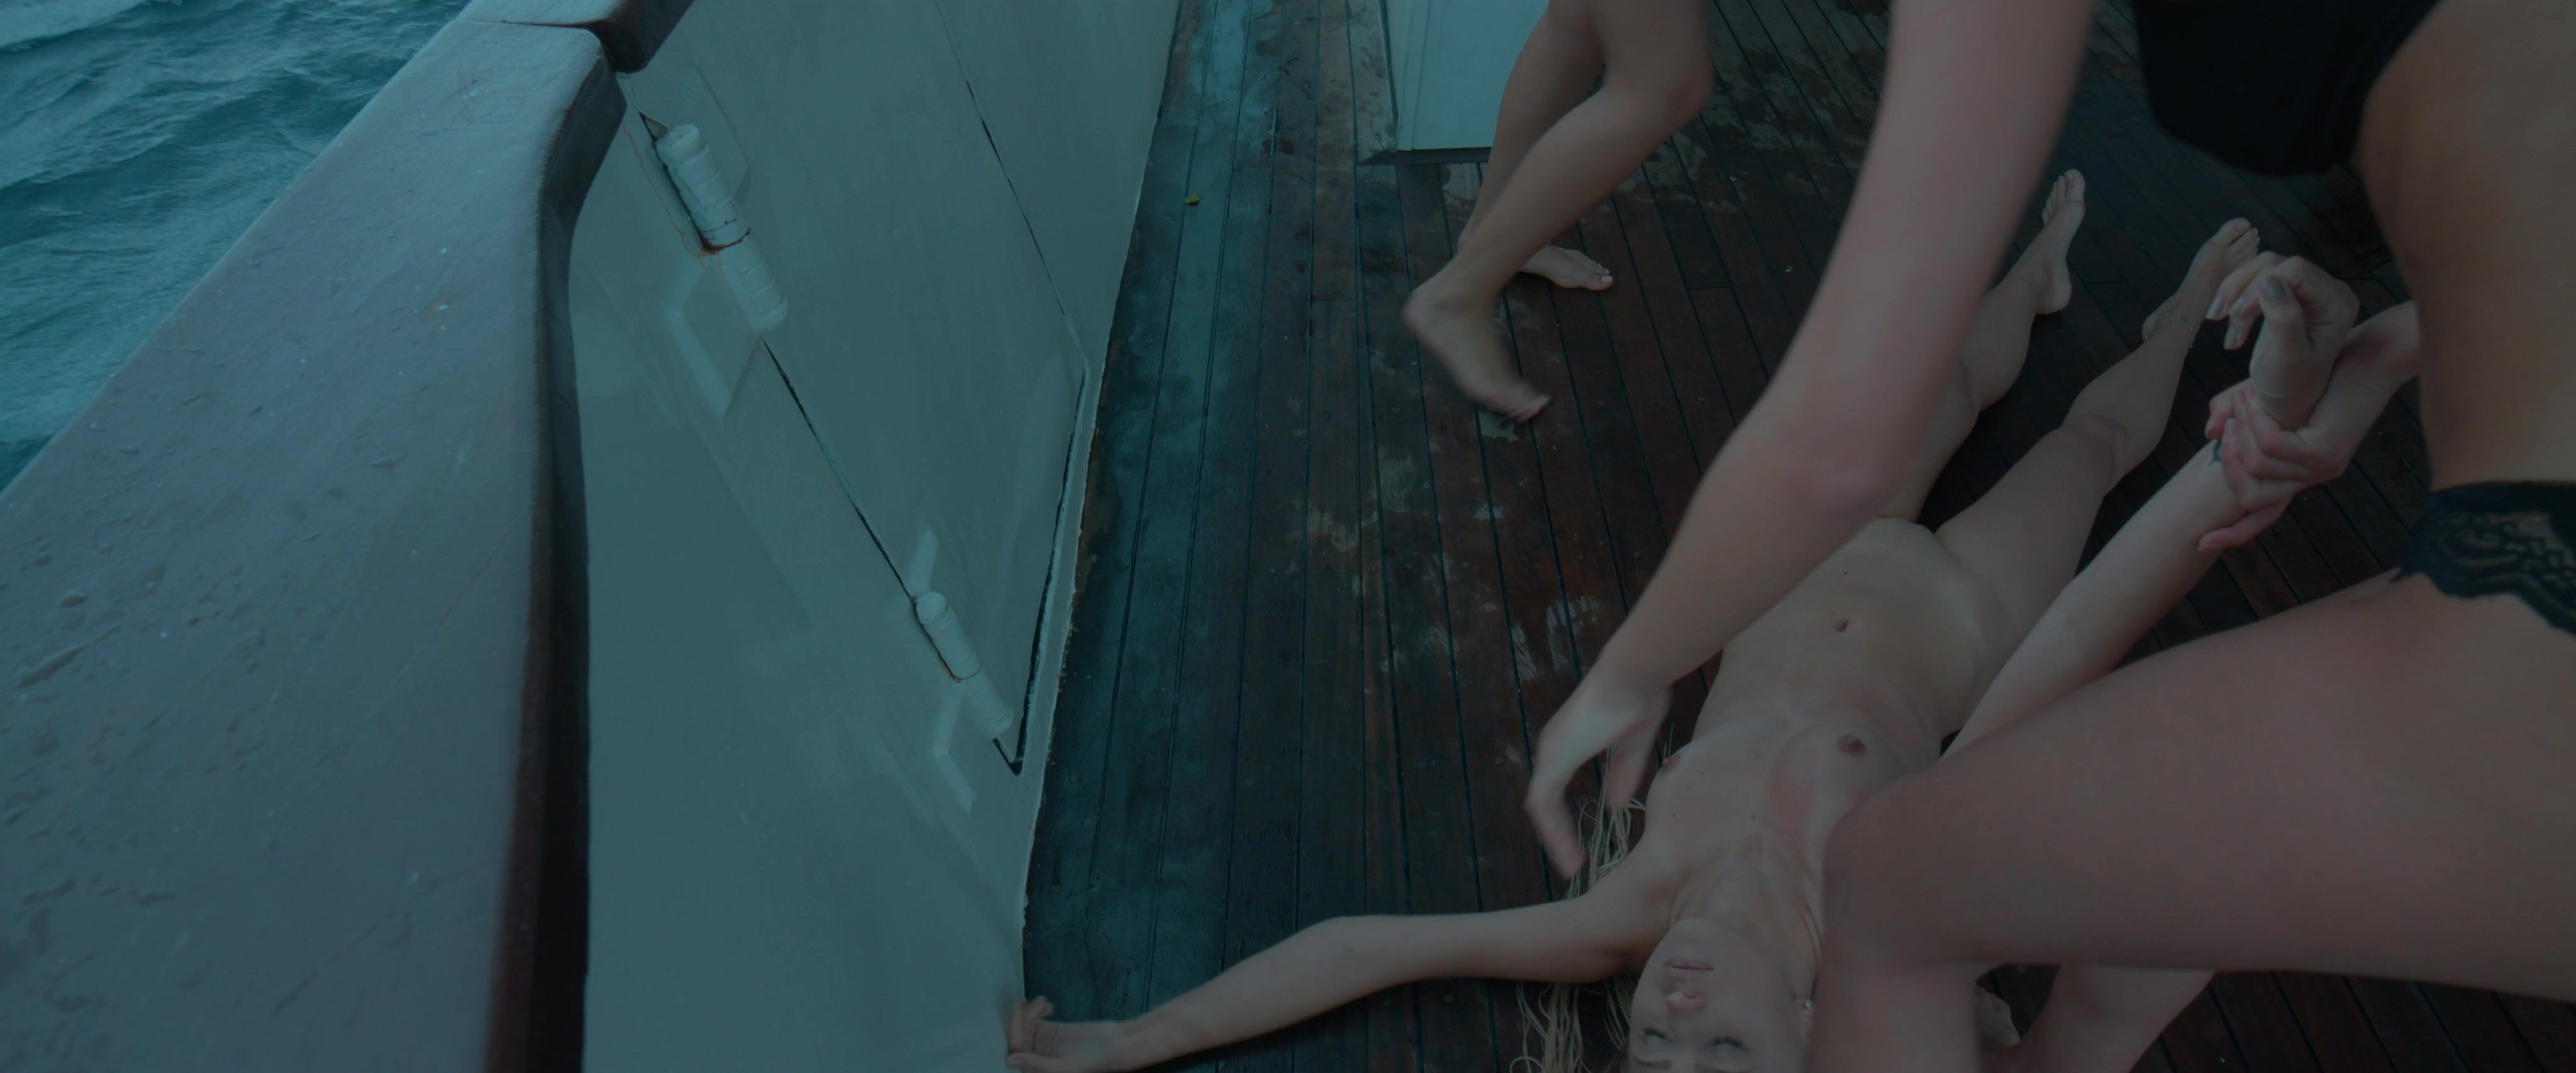 Cams Nude Art Movie - Hallway (Best Erotic Music) SankakuComplex